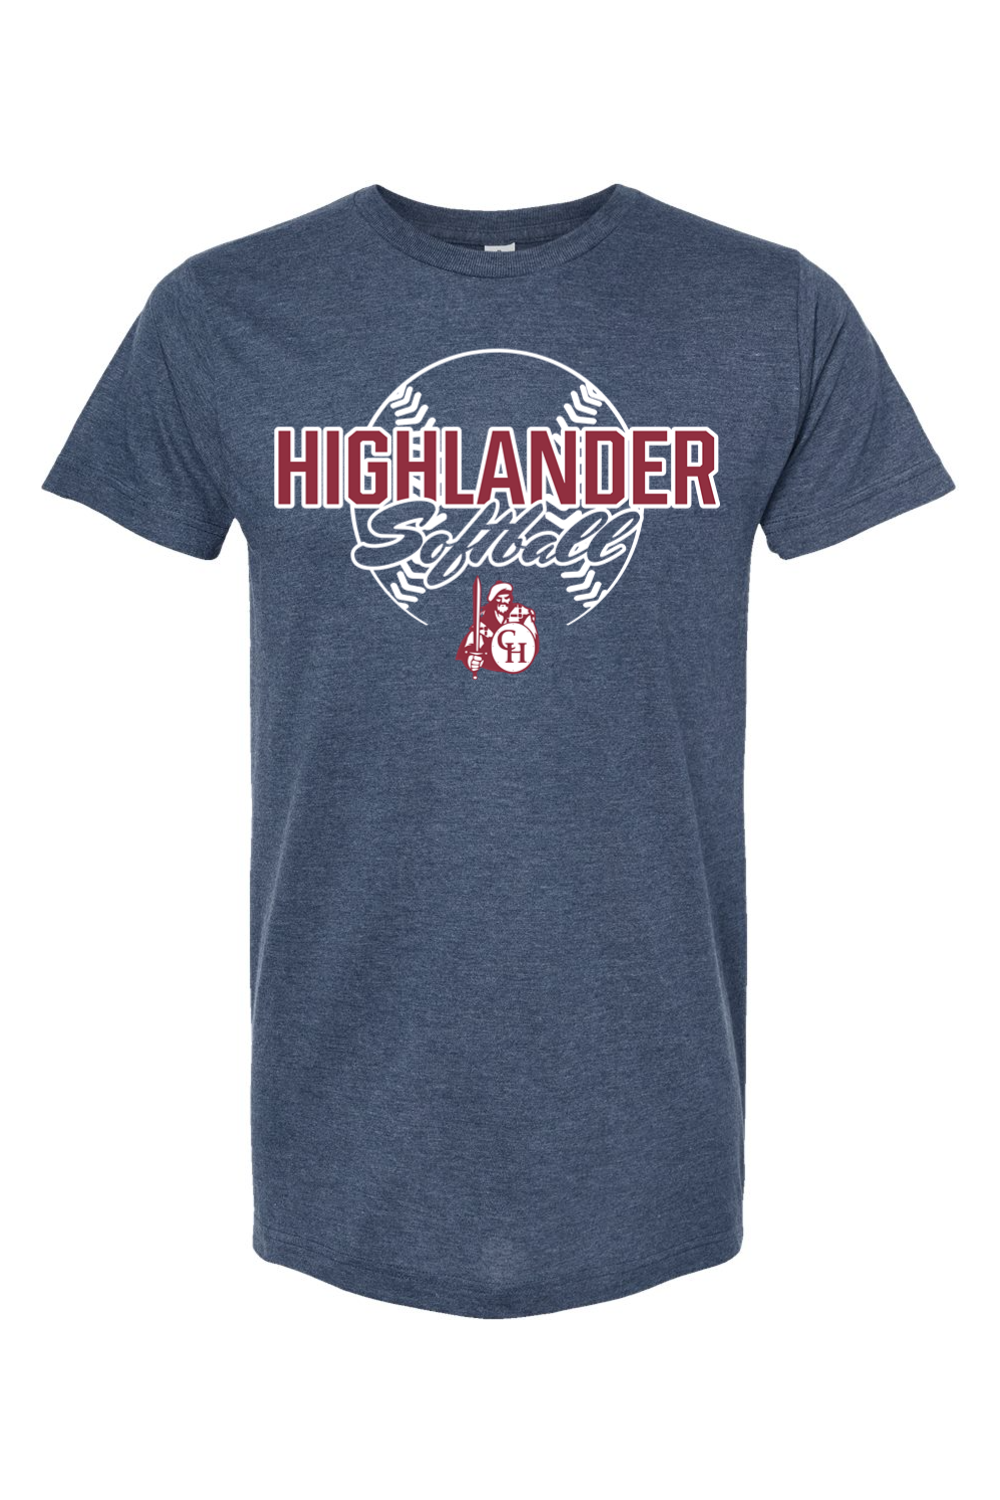 Highlander Softball - T-Shirt - Yinzylvania